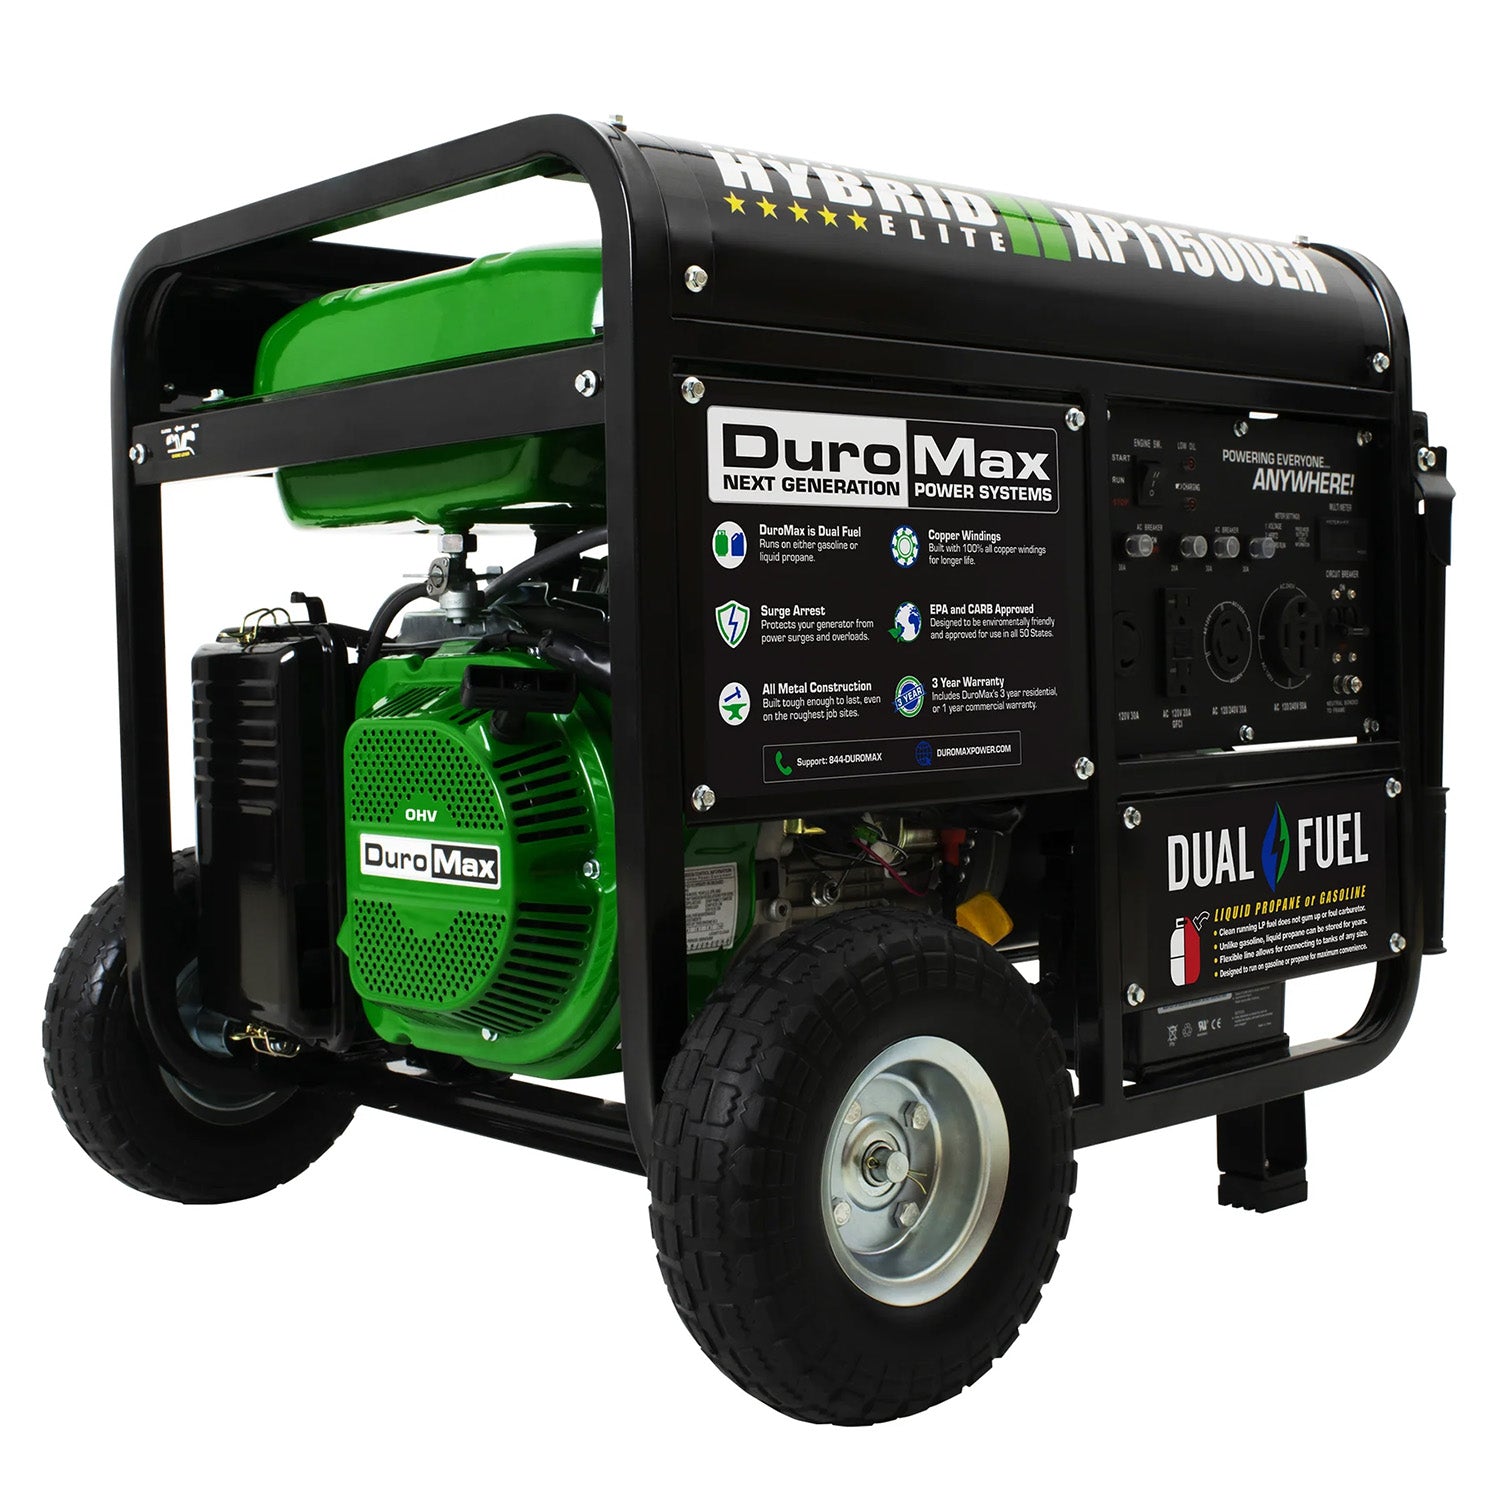 DuroMax XP11500EH Dual Fuel Portable Generator